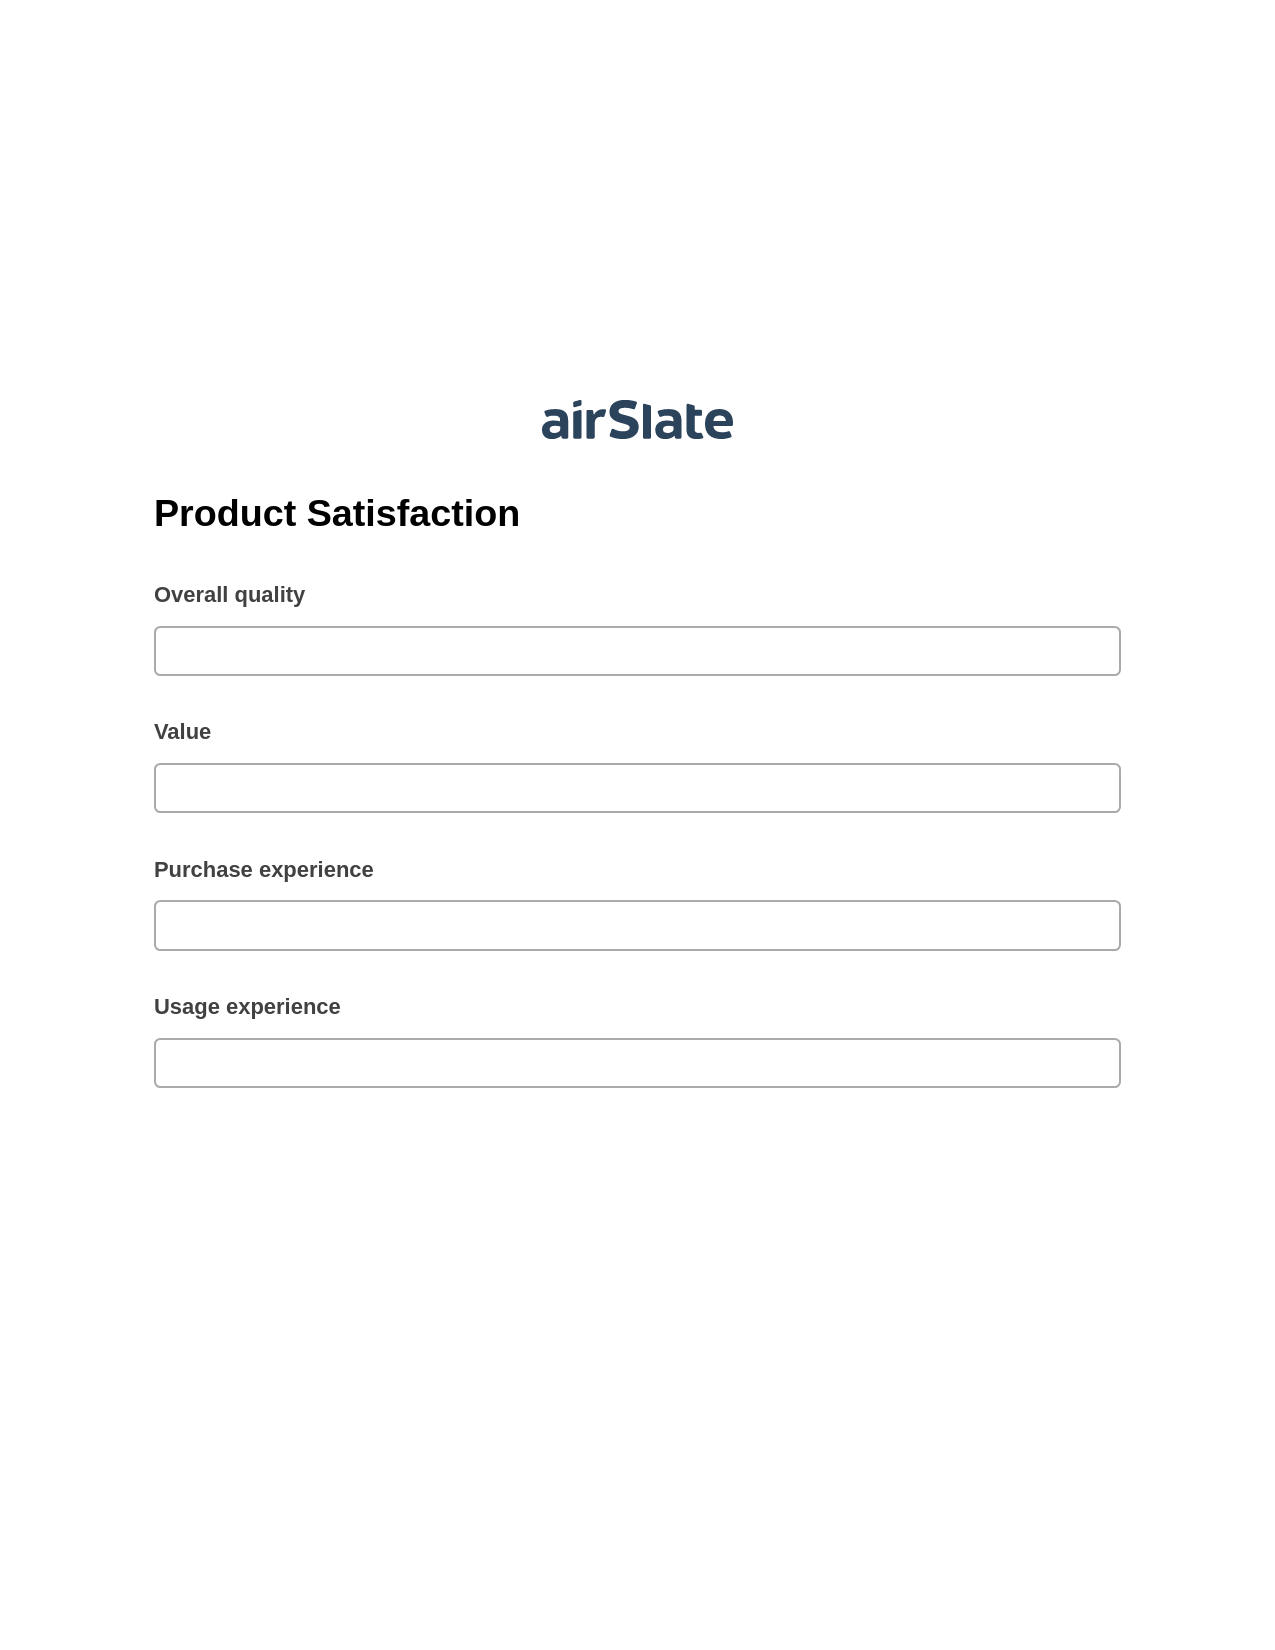 Multirole Product Satisfaction Pre-fill from CSV File Bot, Update Salesforce Record Bot, Slack Notification Postfinish Bot